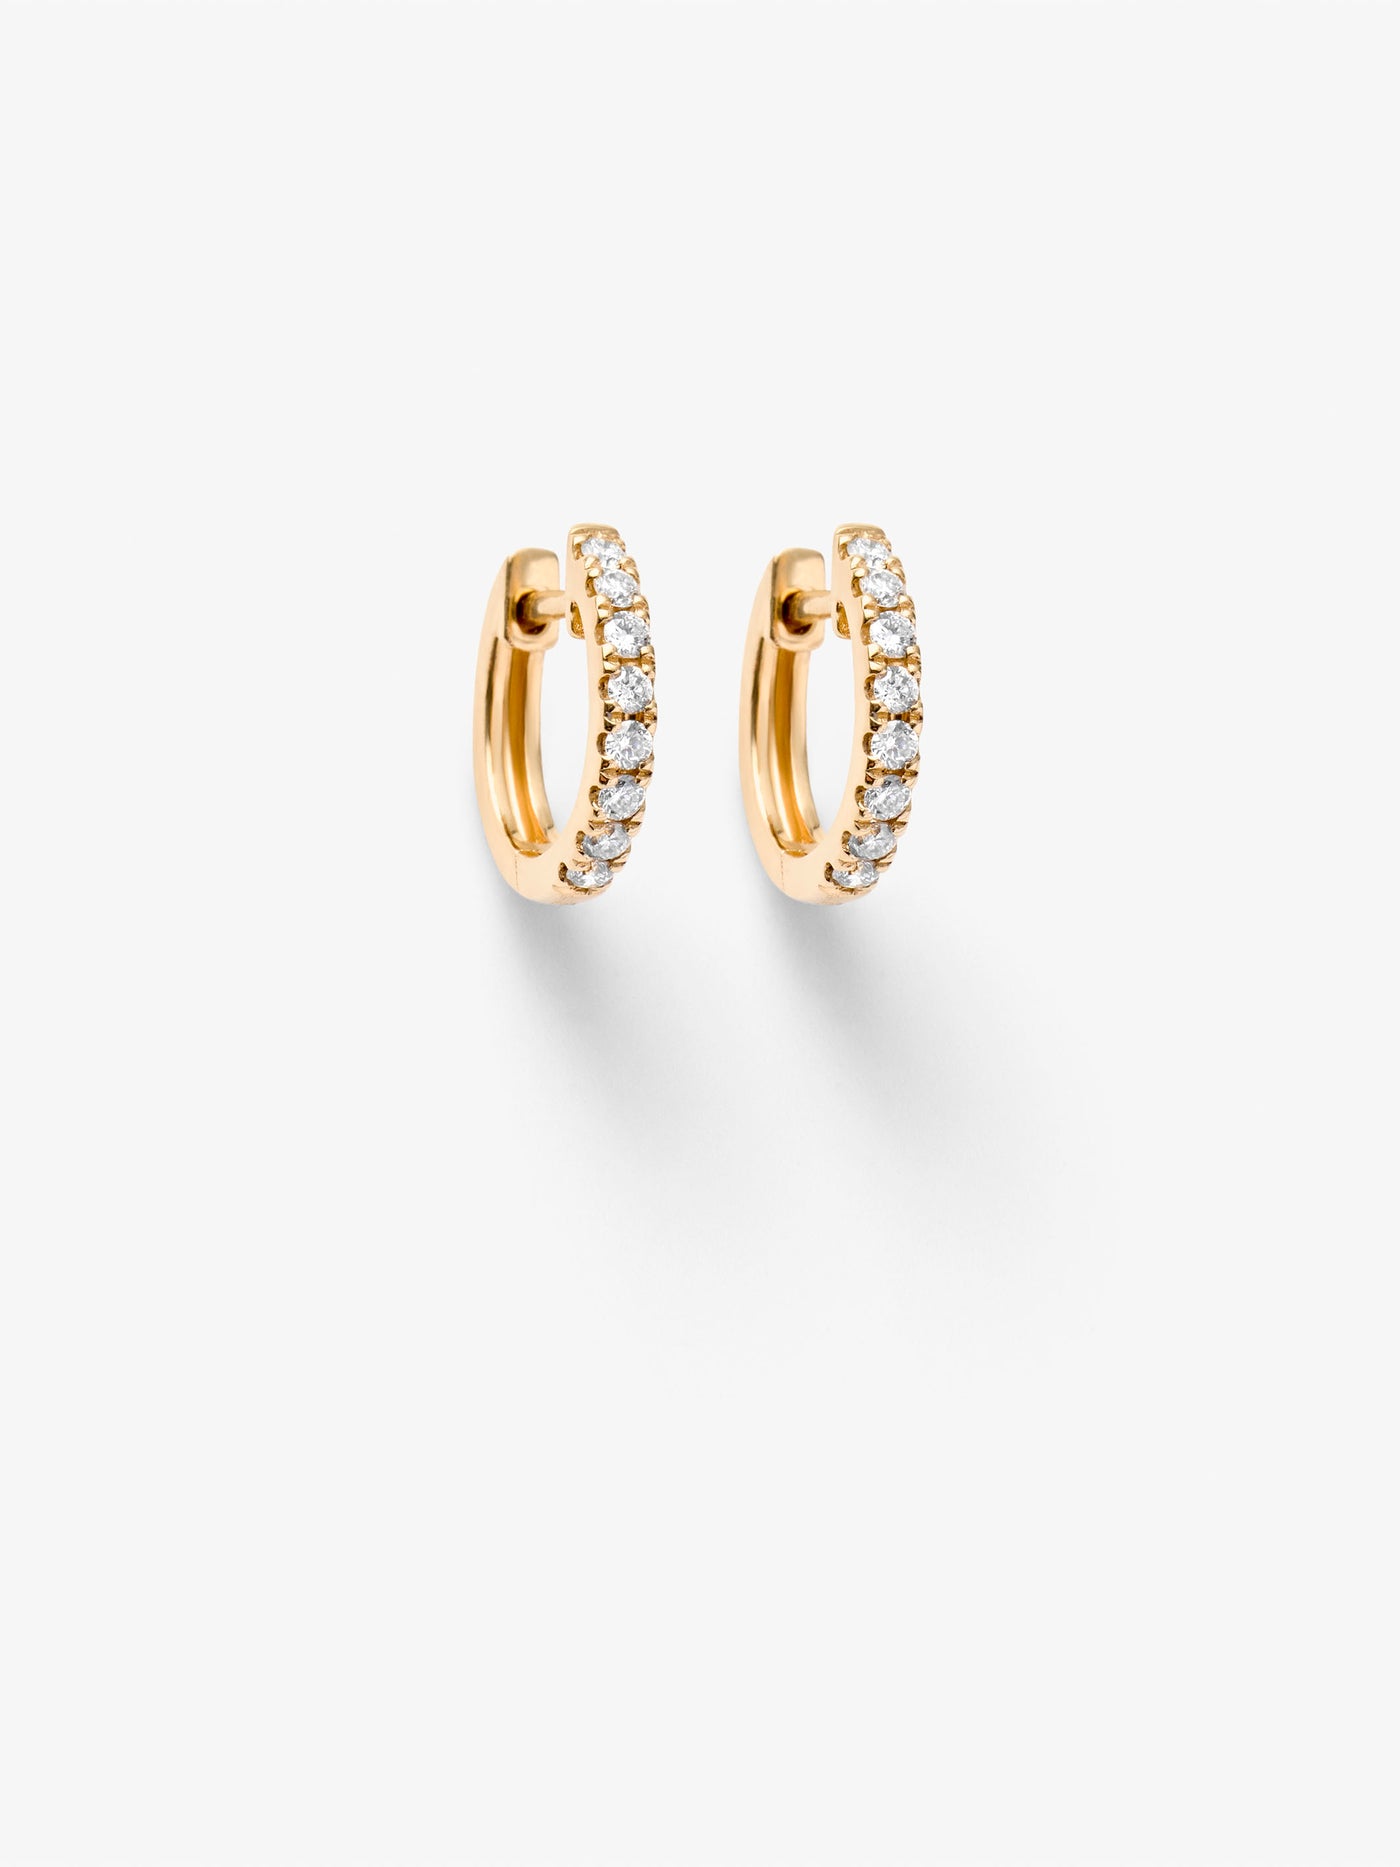 Huggie Earrings in Diamonds and 18k Gold